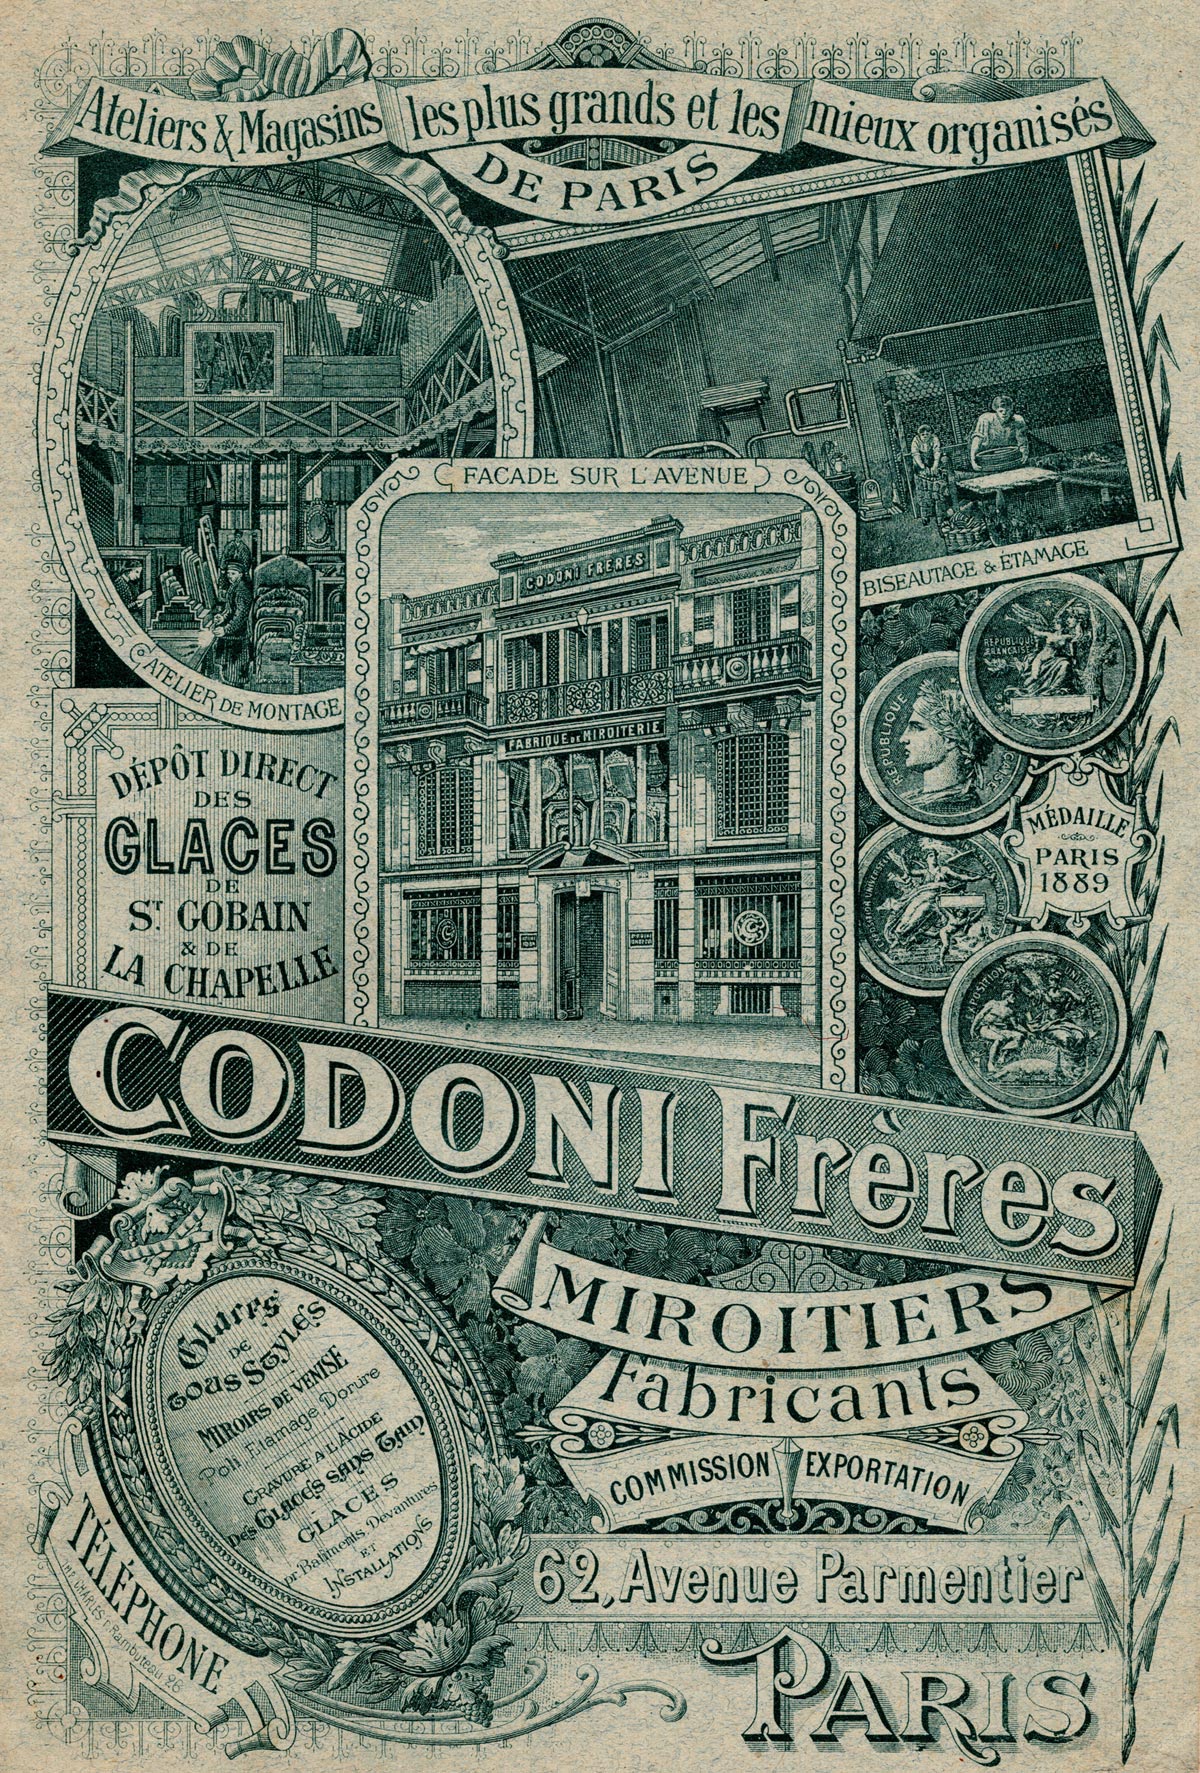 Miroiterie Codoni 1894